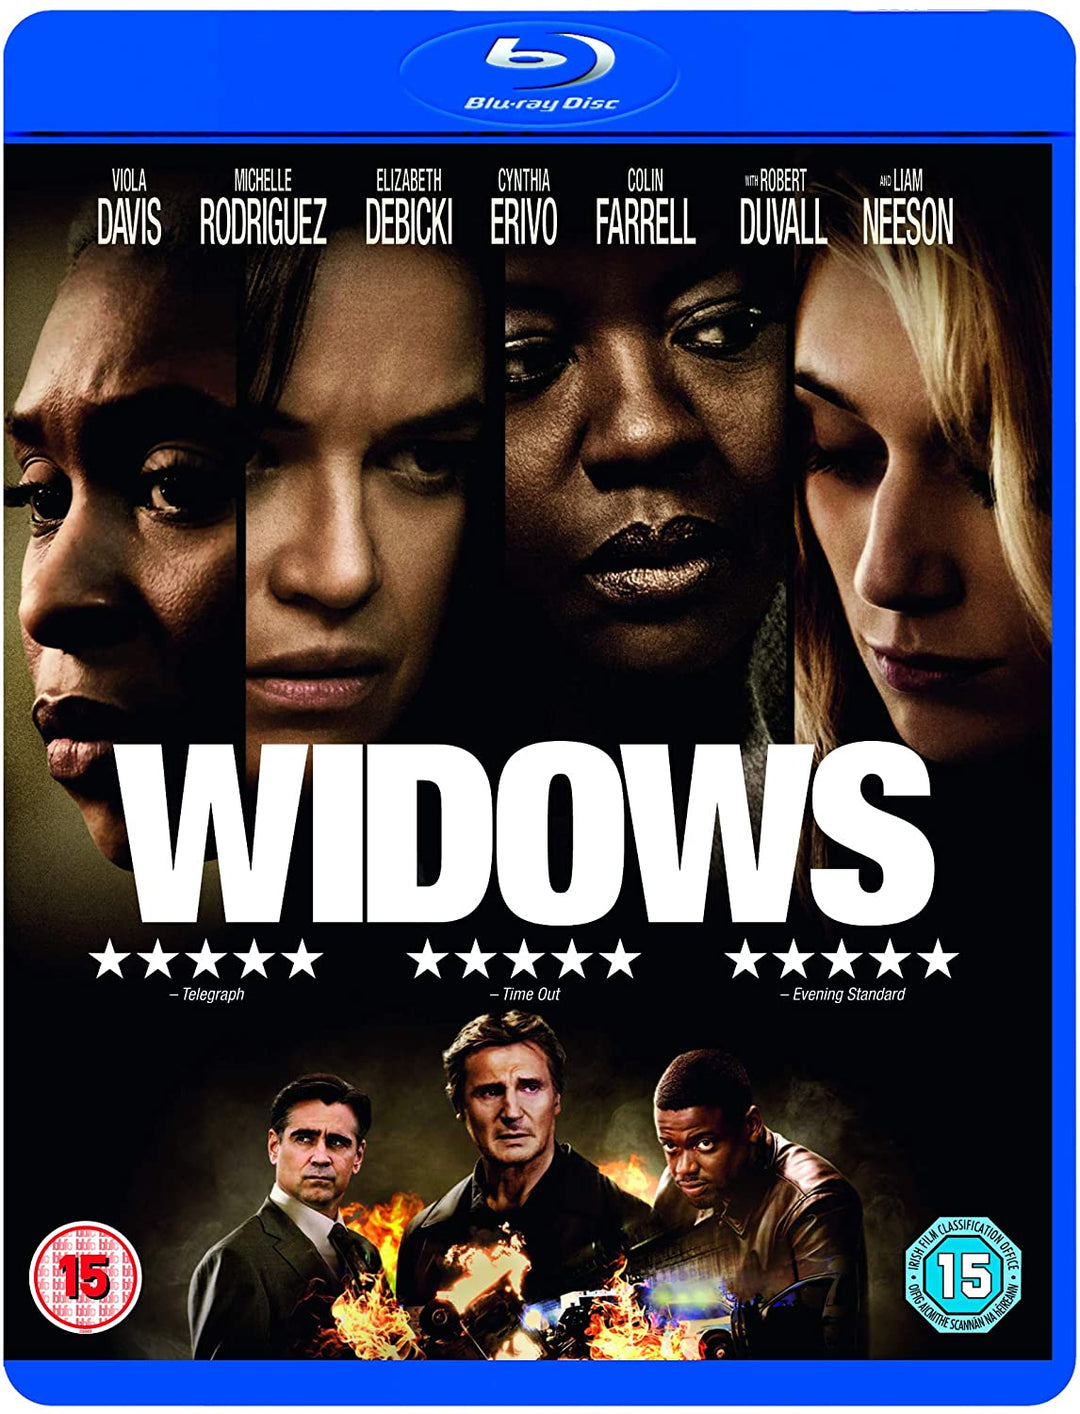 Widows - Crime/Thriller [Blu-ray]